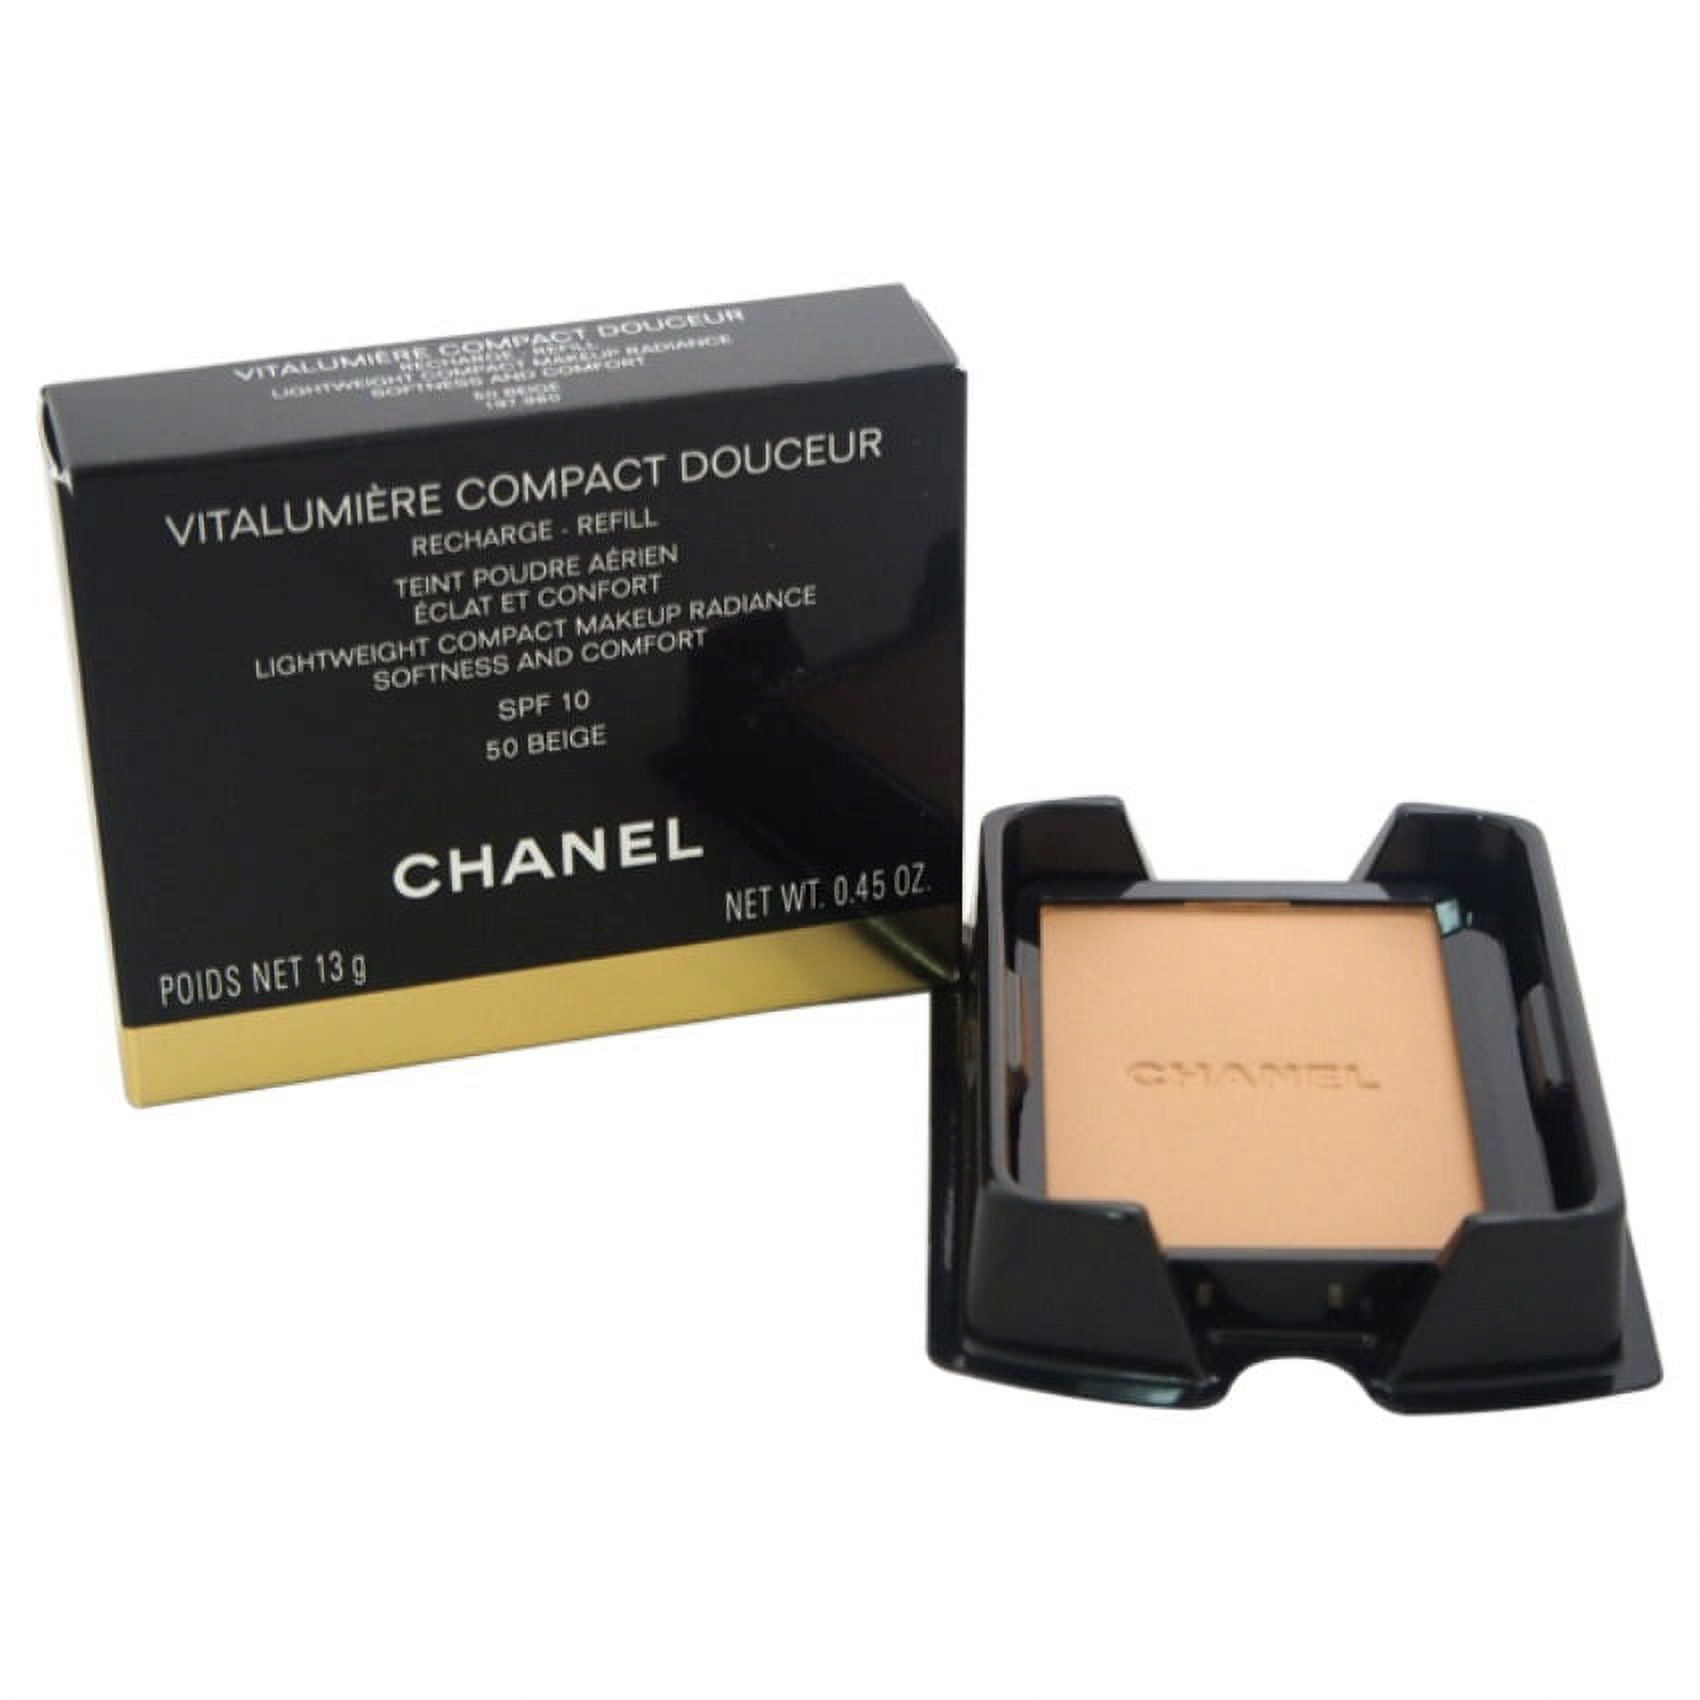 Lightweight Compact Makeup Radiance (Recharge)(Refill) SPF 10 - 50 Beige  Chanel Makeup for Women 0.45 oz